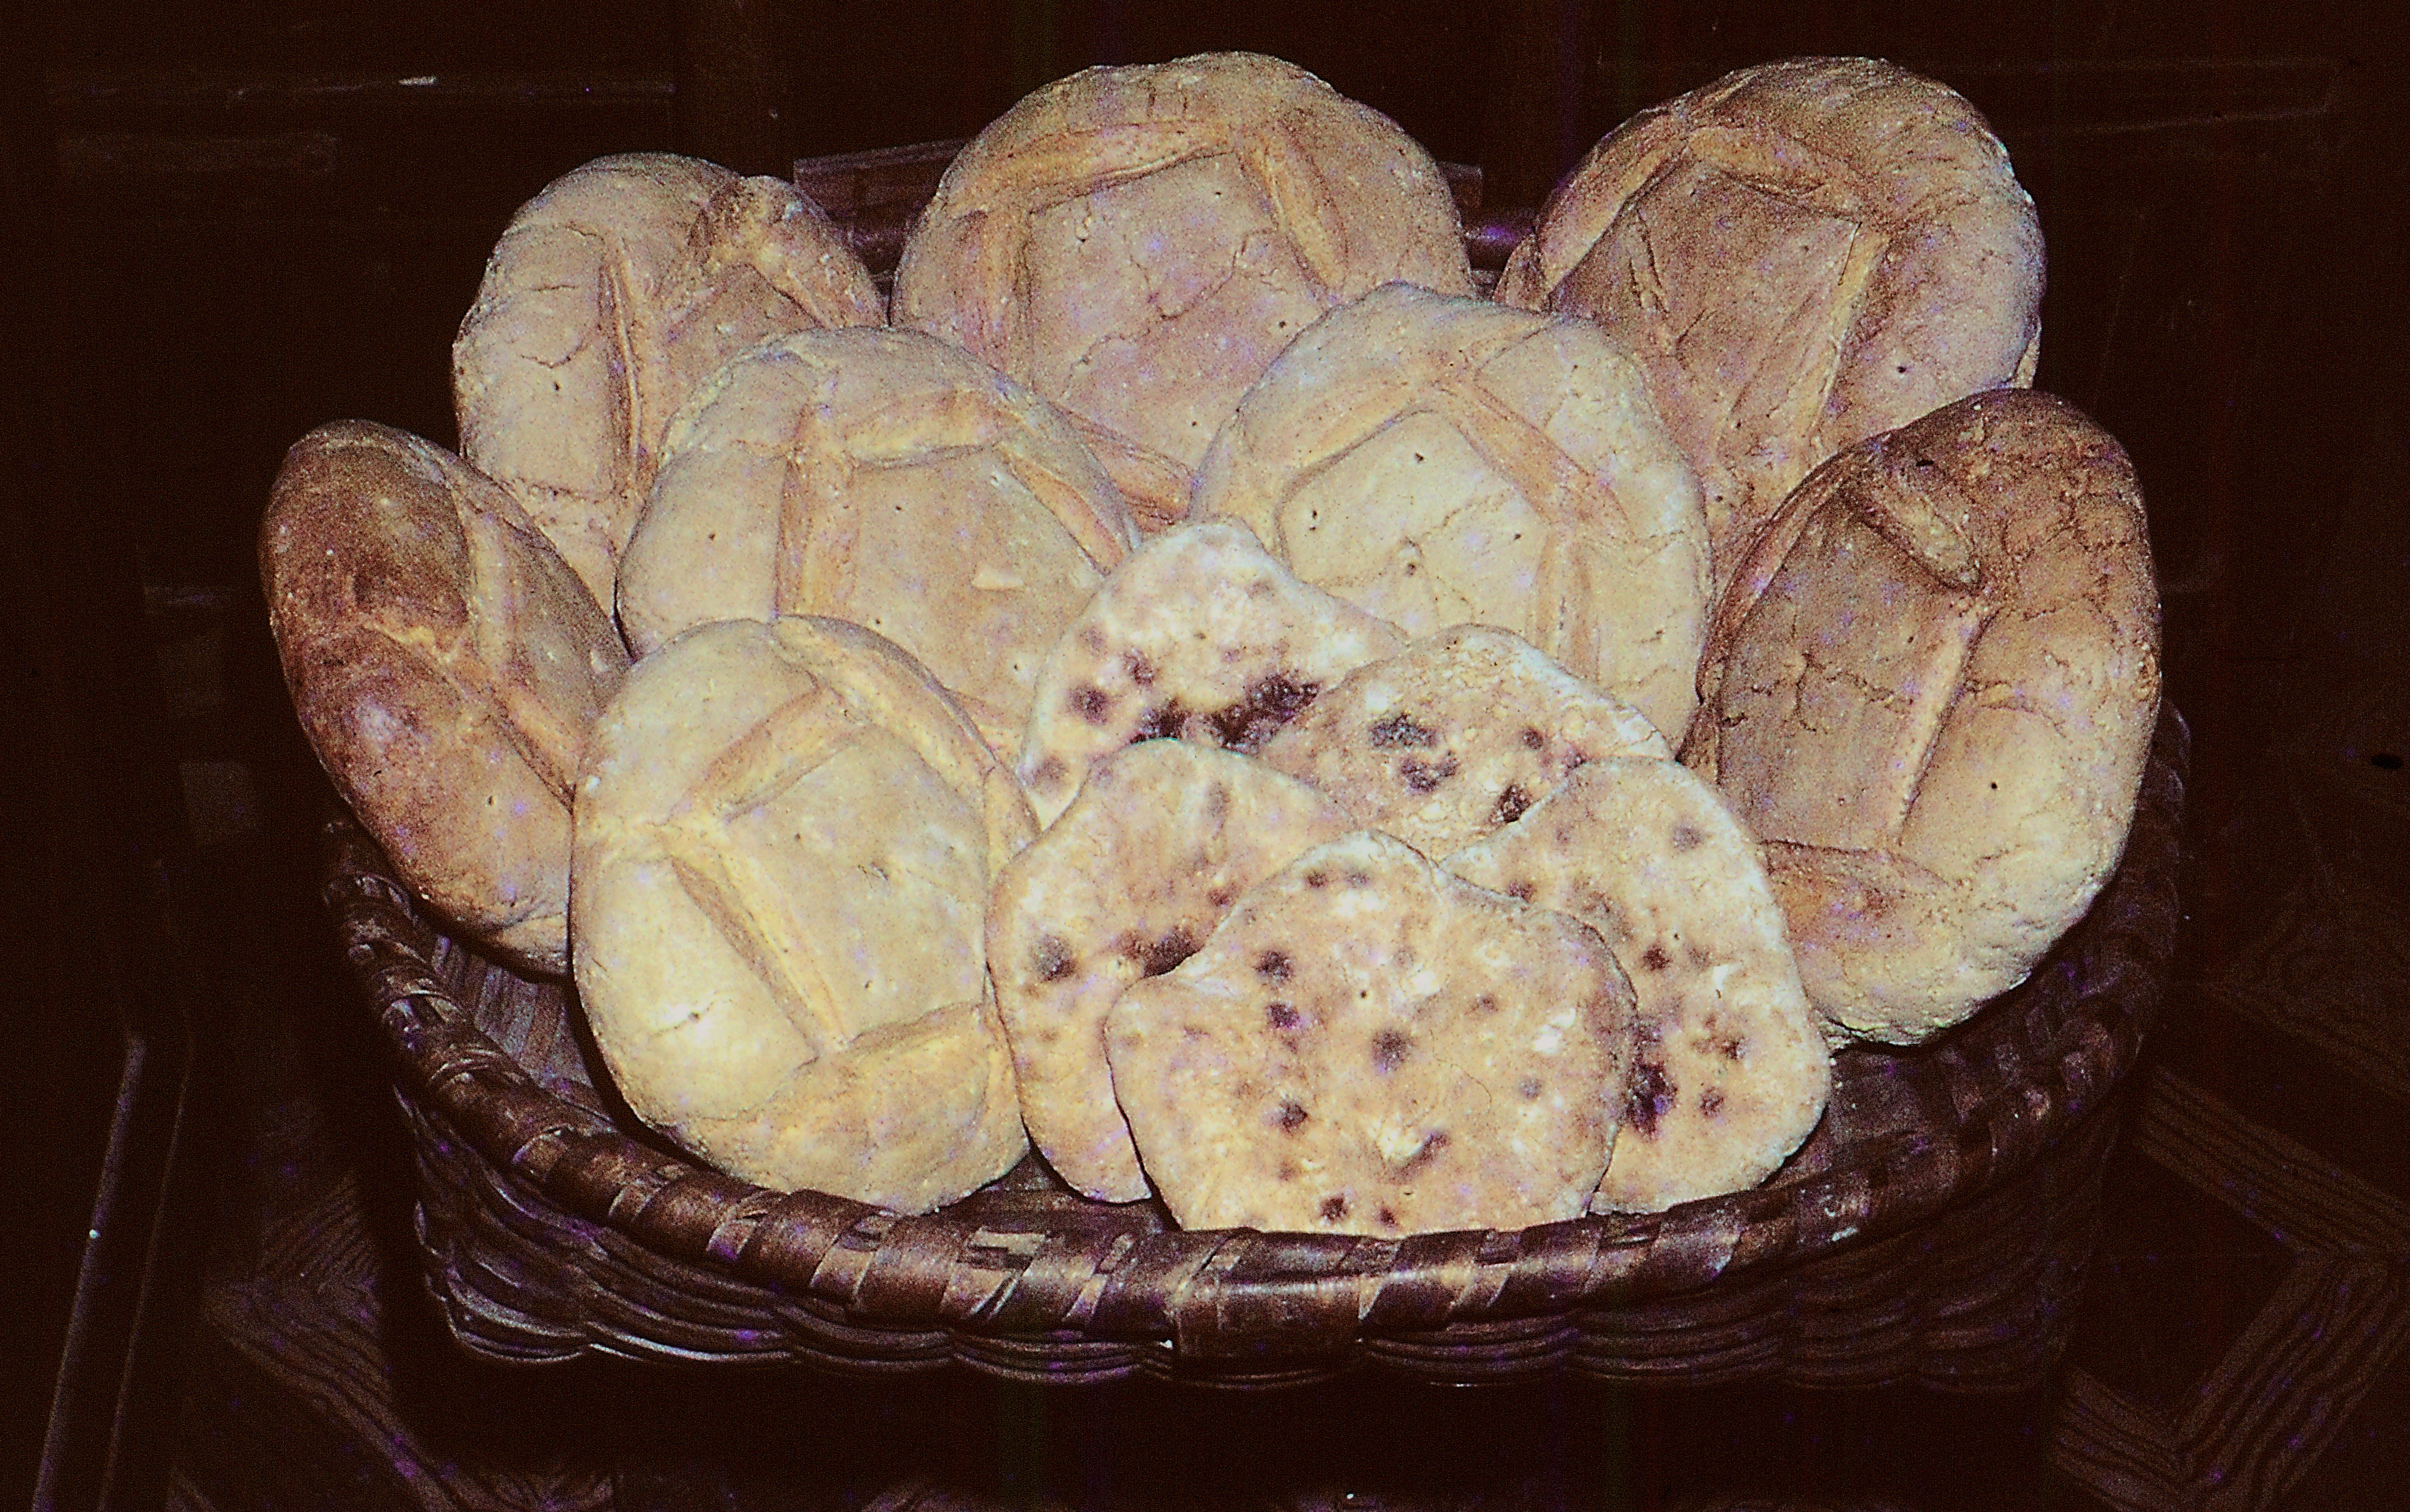 Homemade batch of bread. Ander Manterola